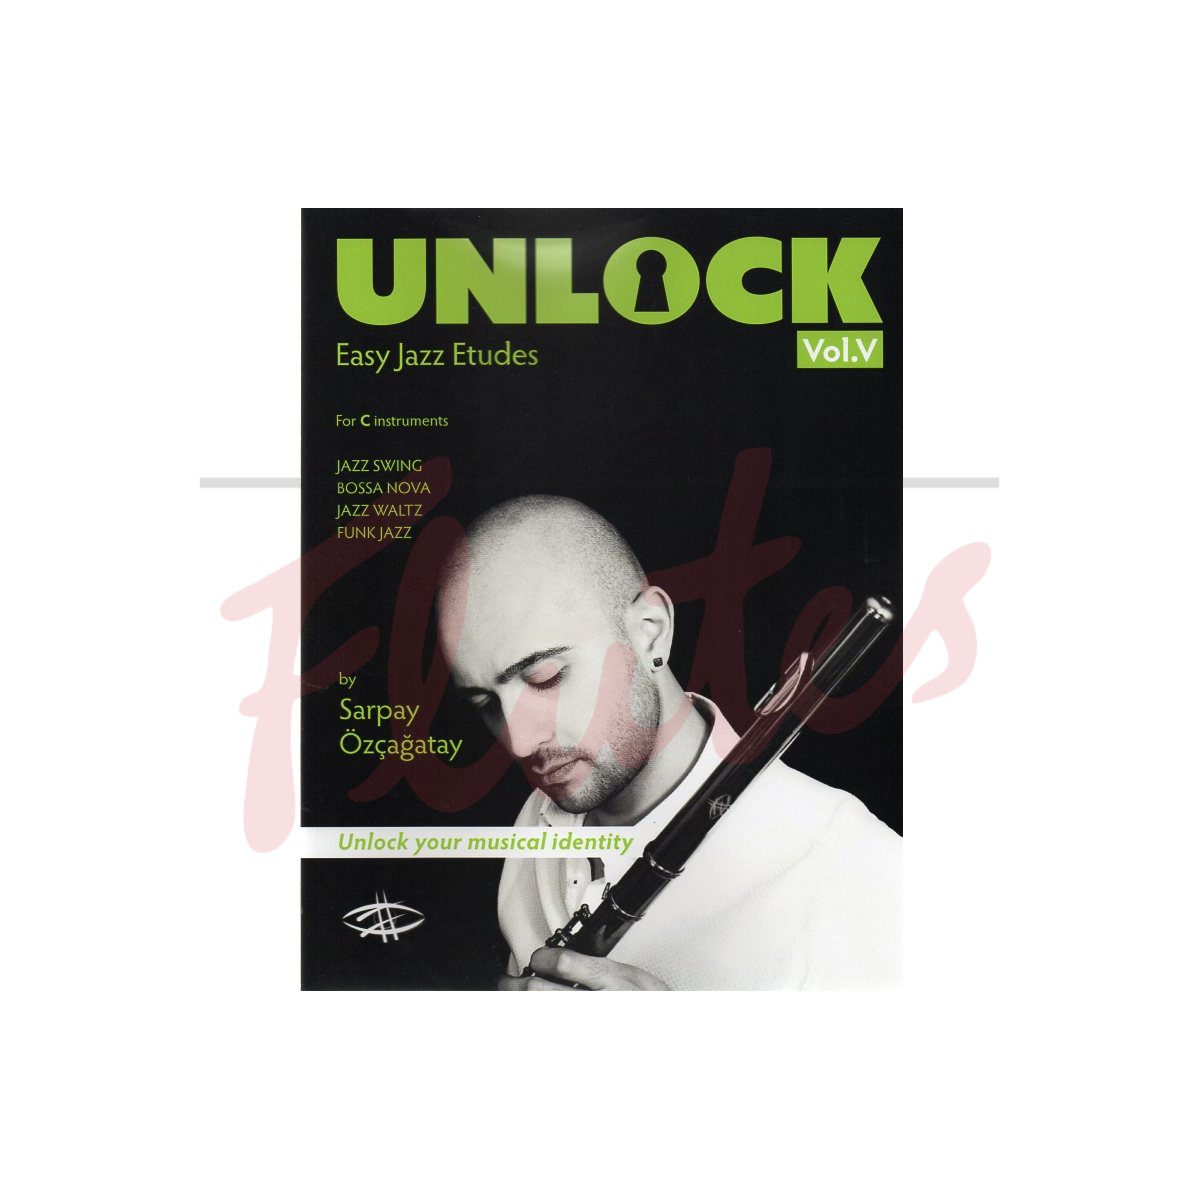 Unlock Vol 5 - Easy Jazz Etudes for C instruments